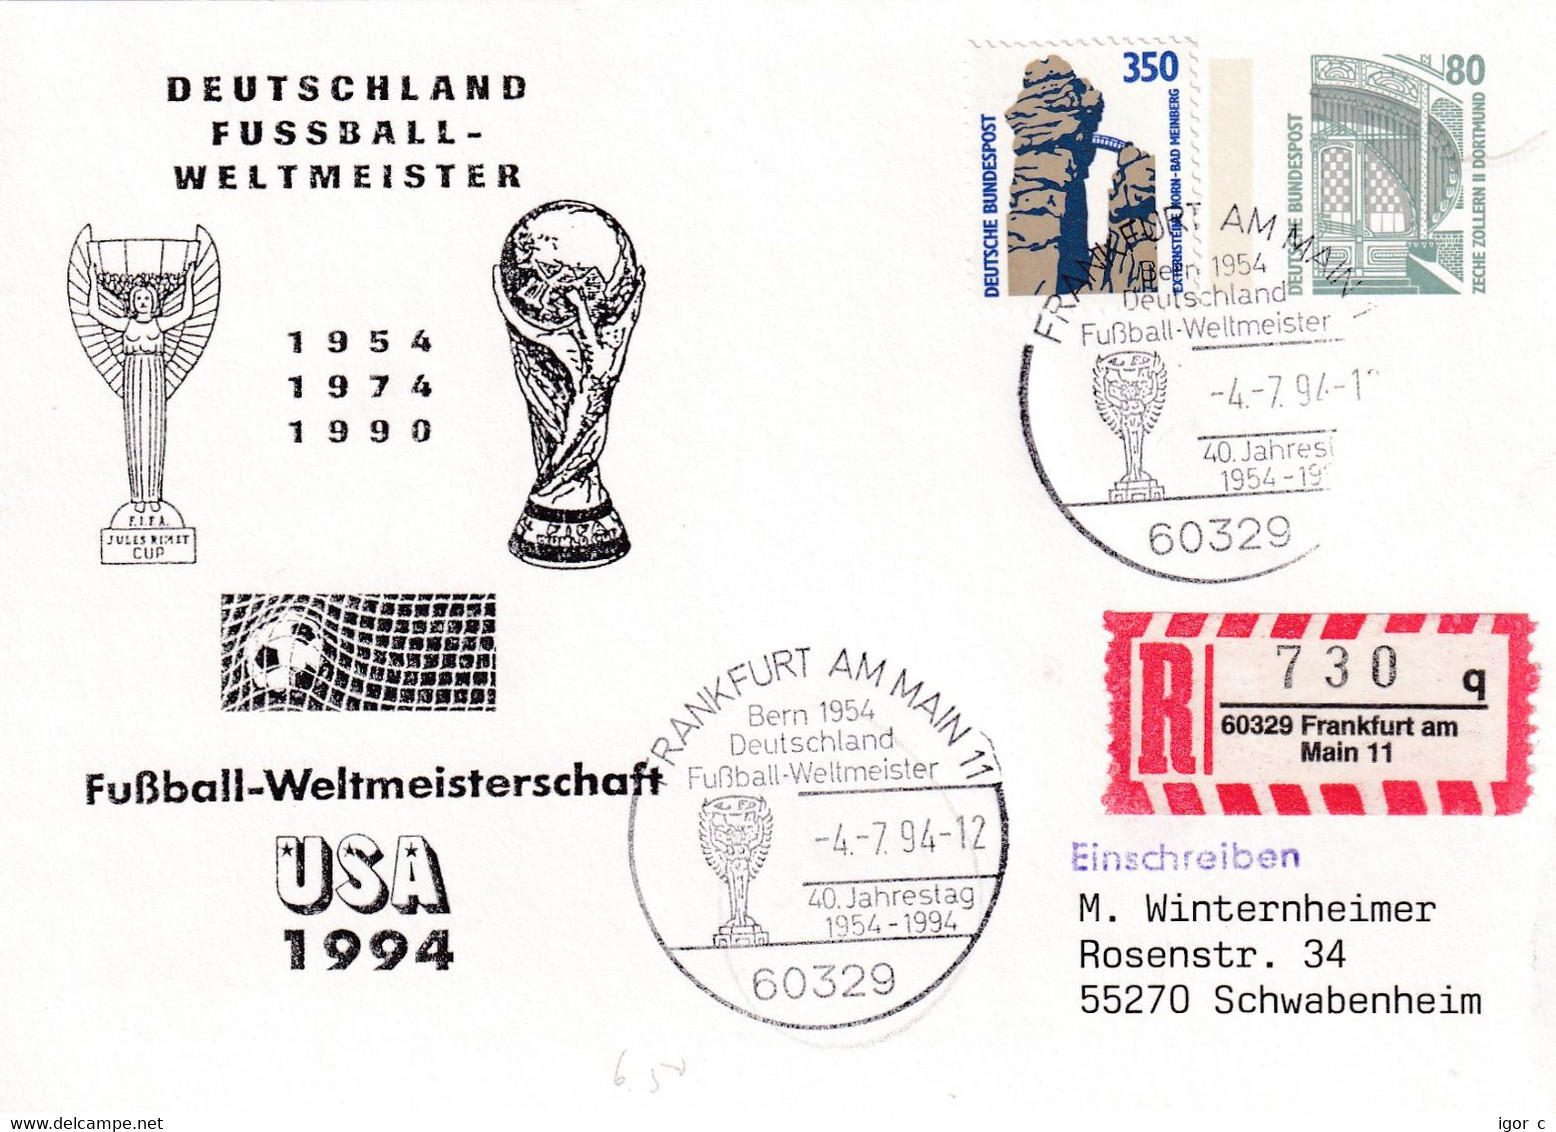 USA 1994 Registered Postal Stationery Card: Football Soccer Calcio Fussball; FIFA World Cup USA; Wunder Von Bern - 1954 – Svizzera